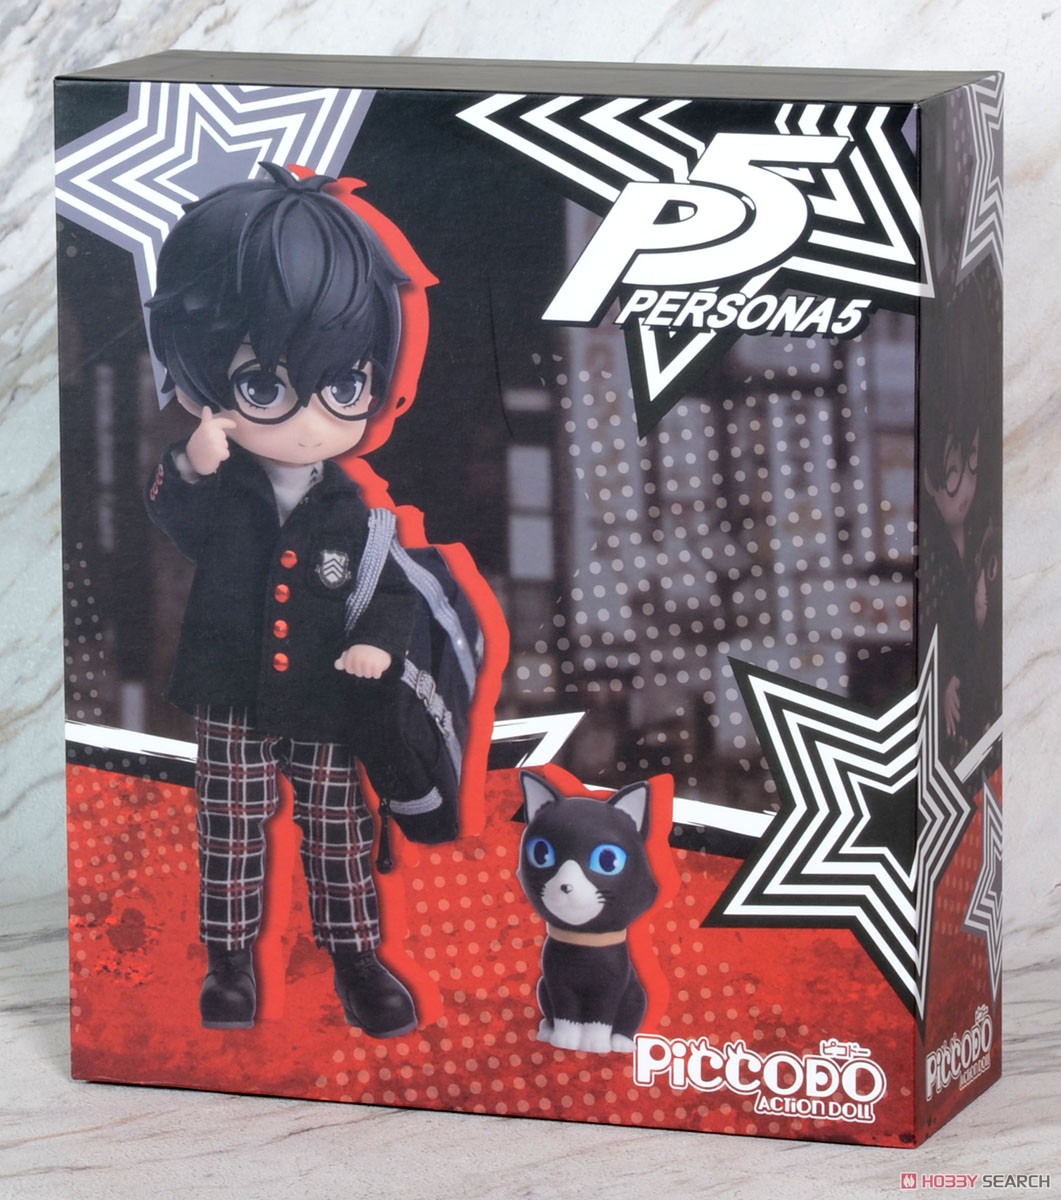 Piccodo Persona 5 Hero Deformed Doll (Fashion Doll) Package1